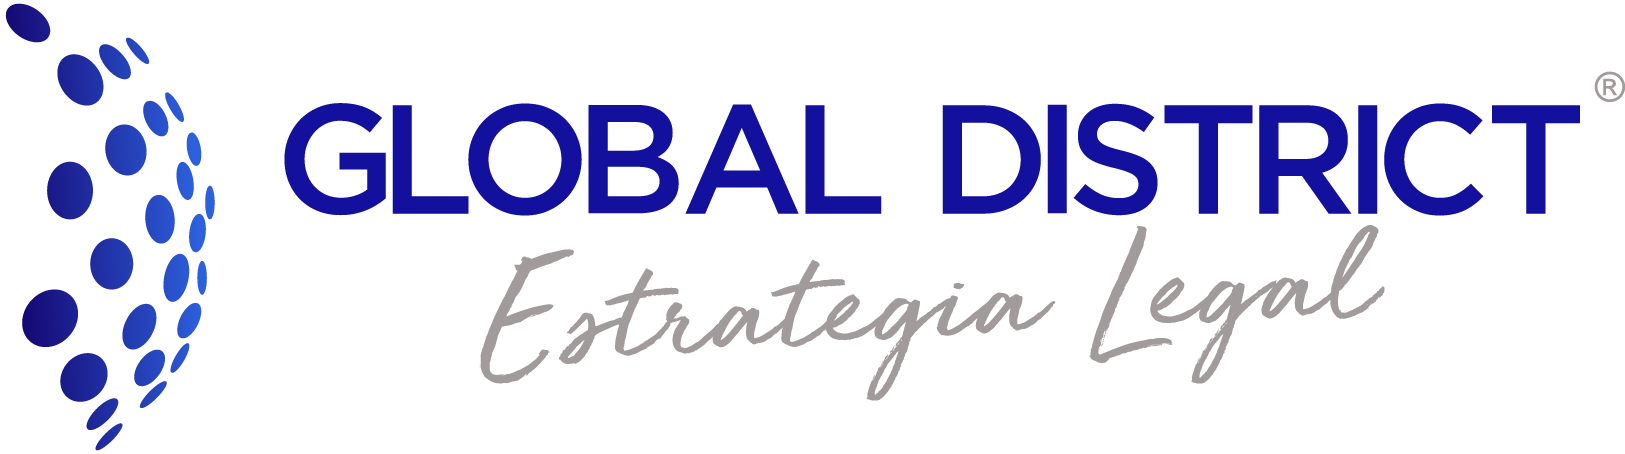 Global District logo